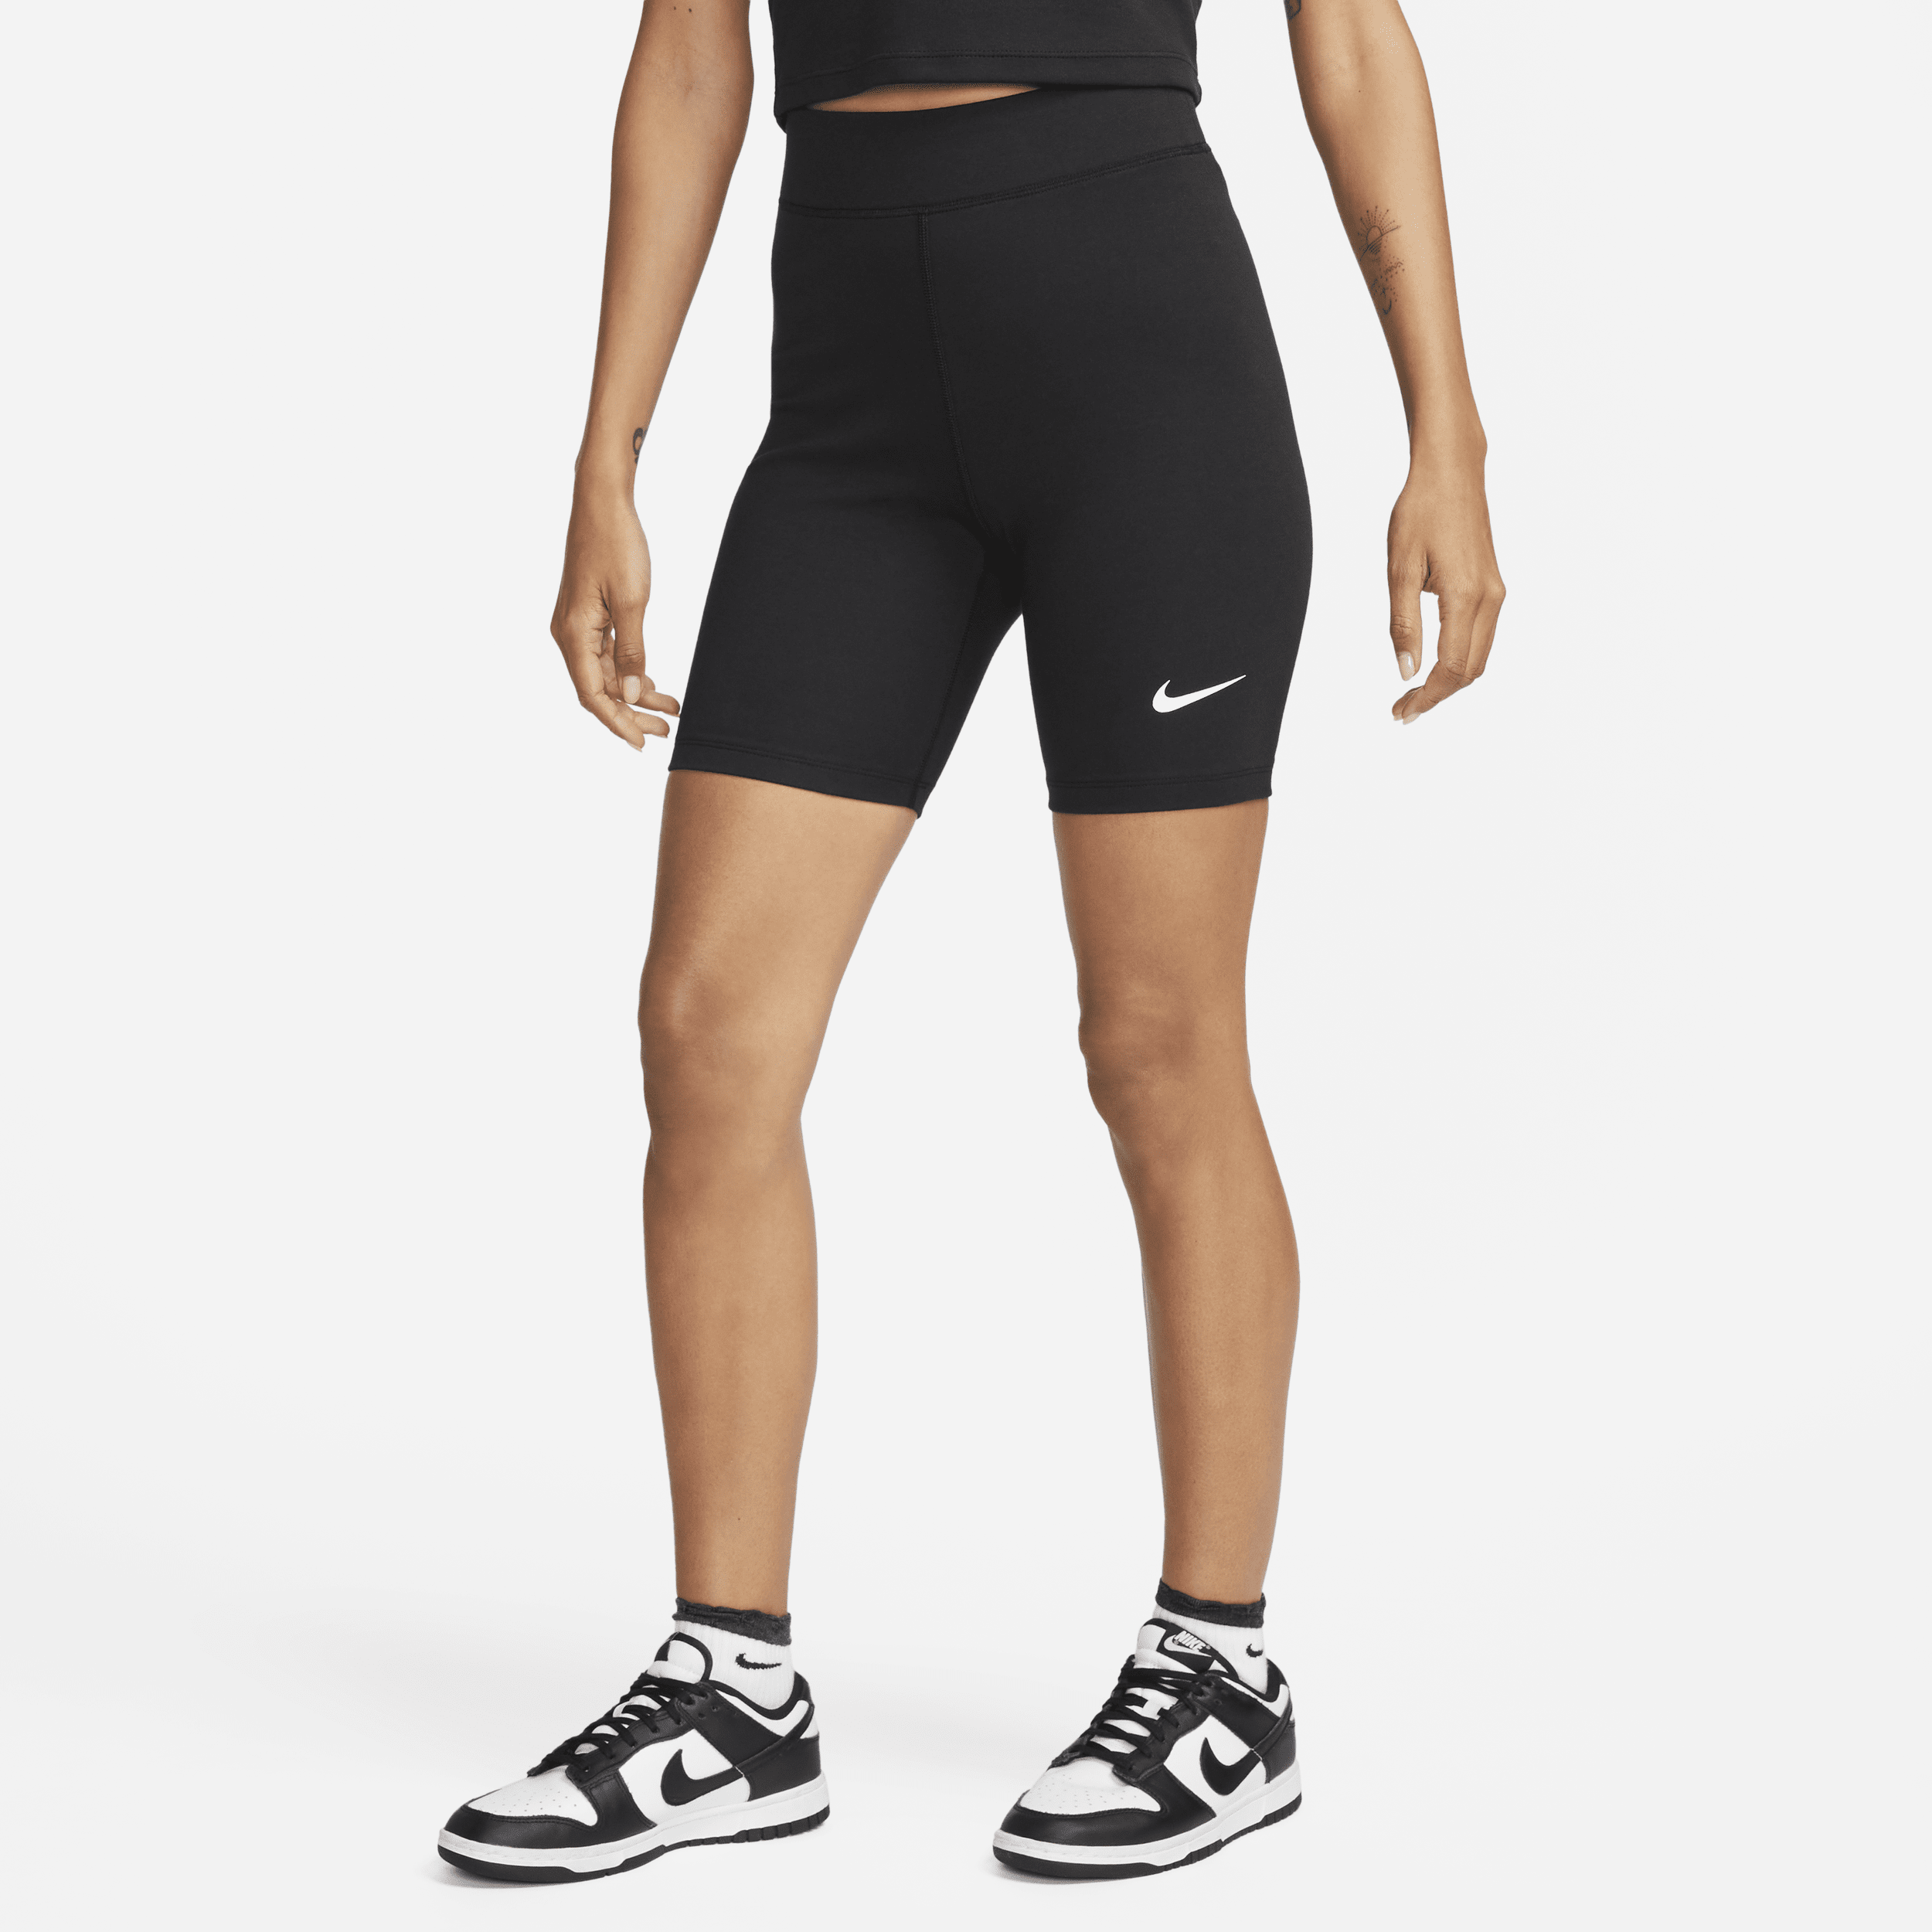 Nike Sportswear Classic-cykelshorts med høj talje (20 cm) til kvinder - sort